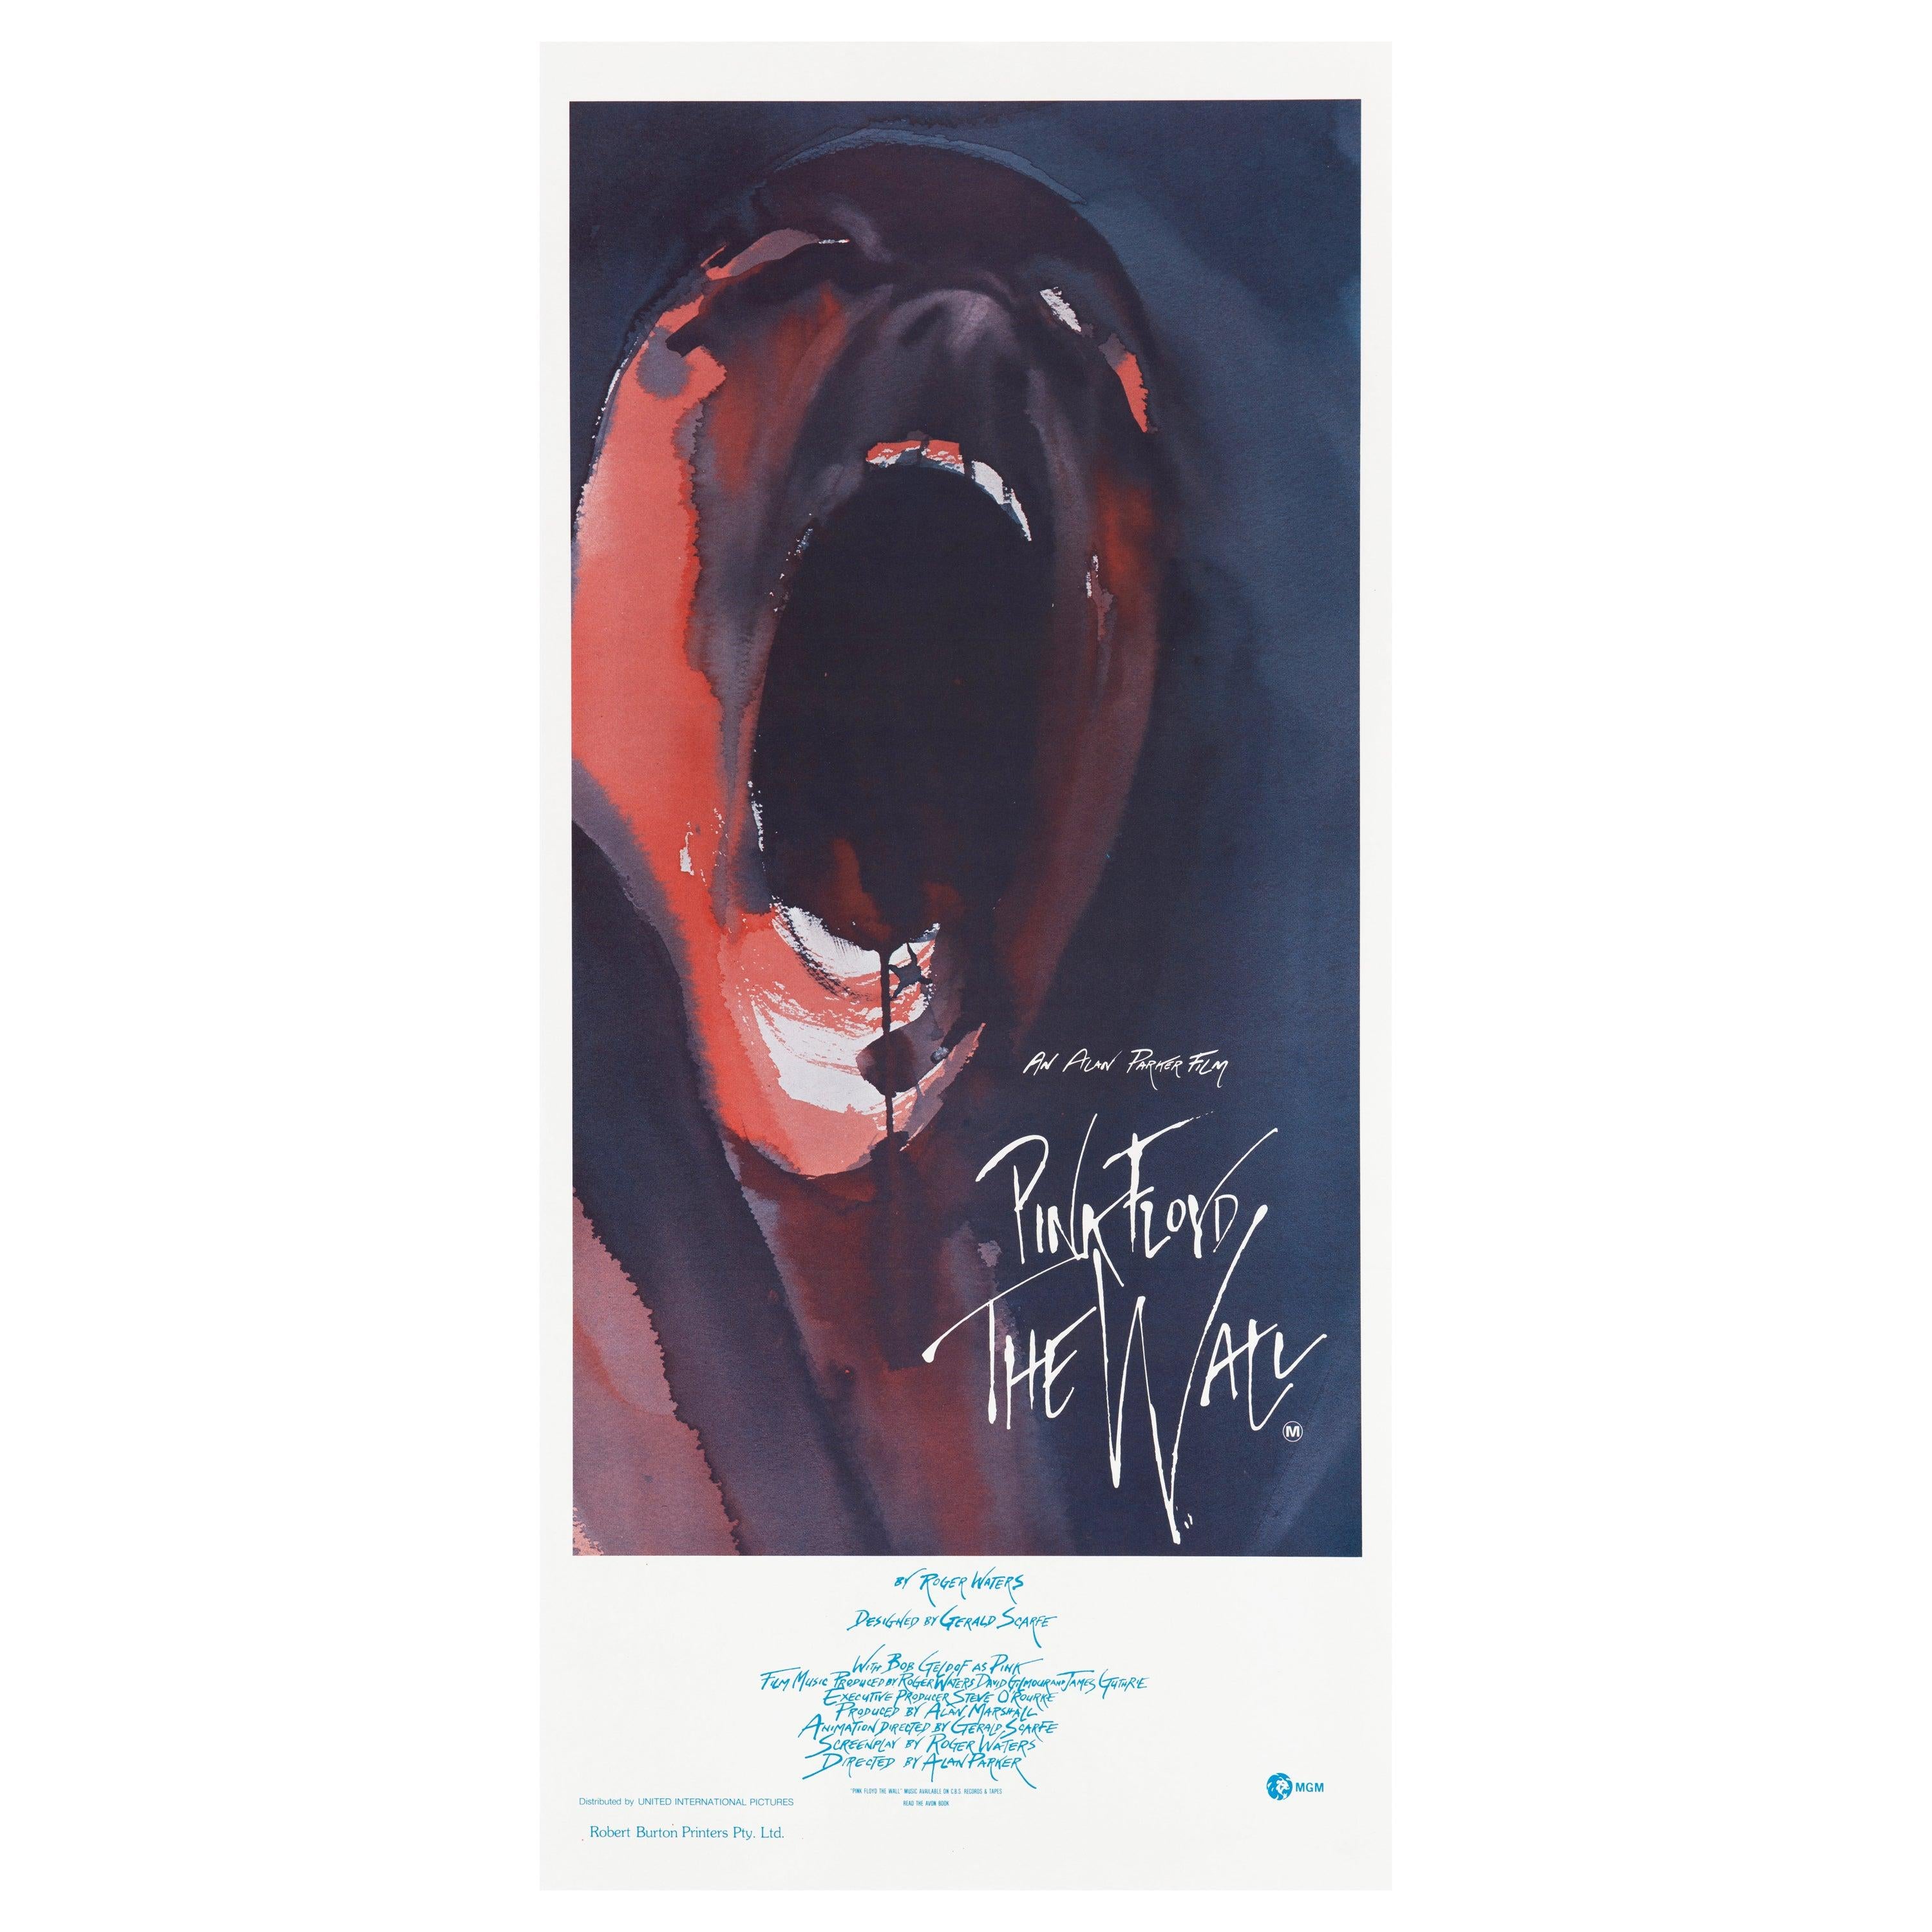 Gerald Scarfe Print - Pink Floyd 'The Wall' Original Vintage Movie Poster, Australian, 1982